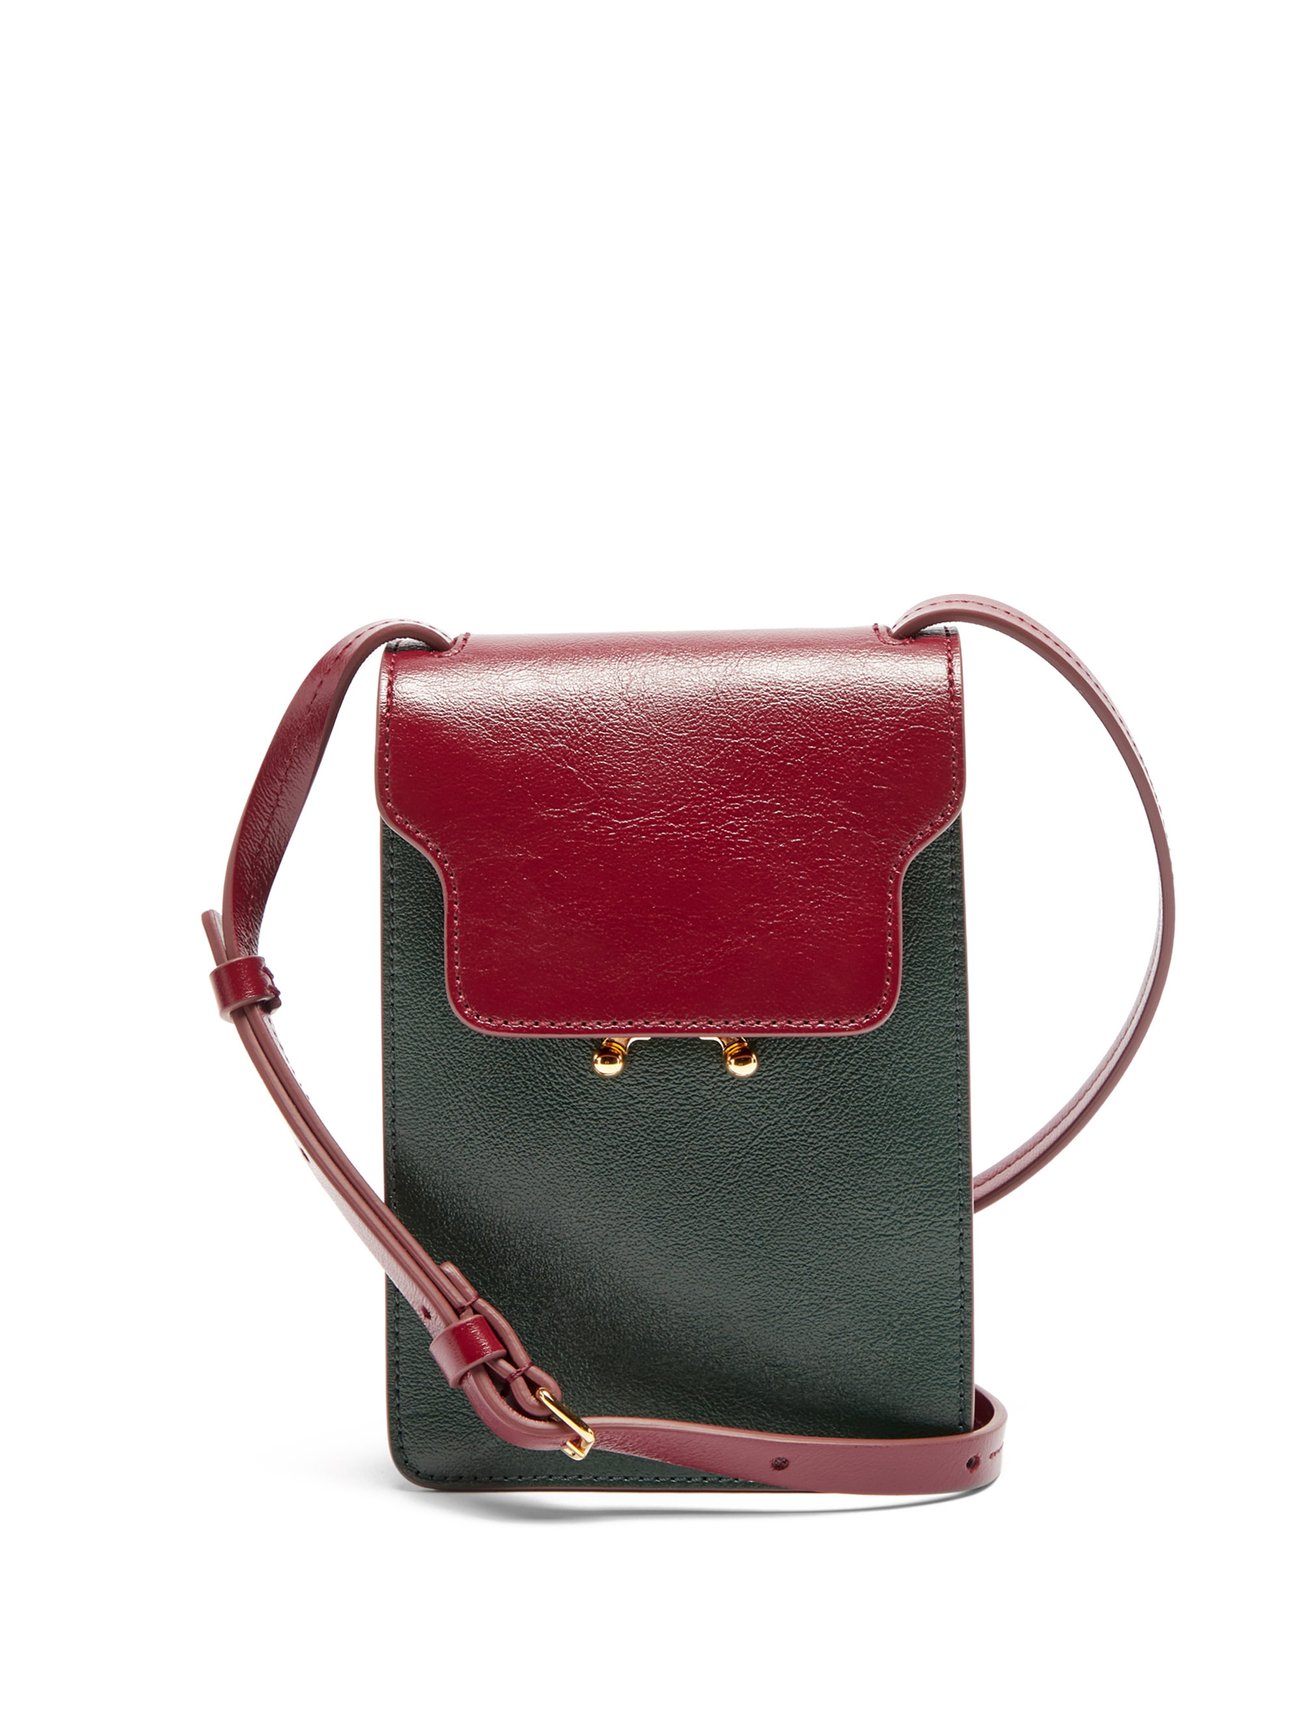 Marni – Gerluxe | Designer Bag For Sale, Used Designer Bags For Sale.